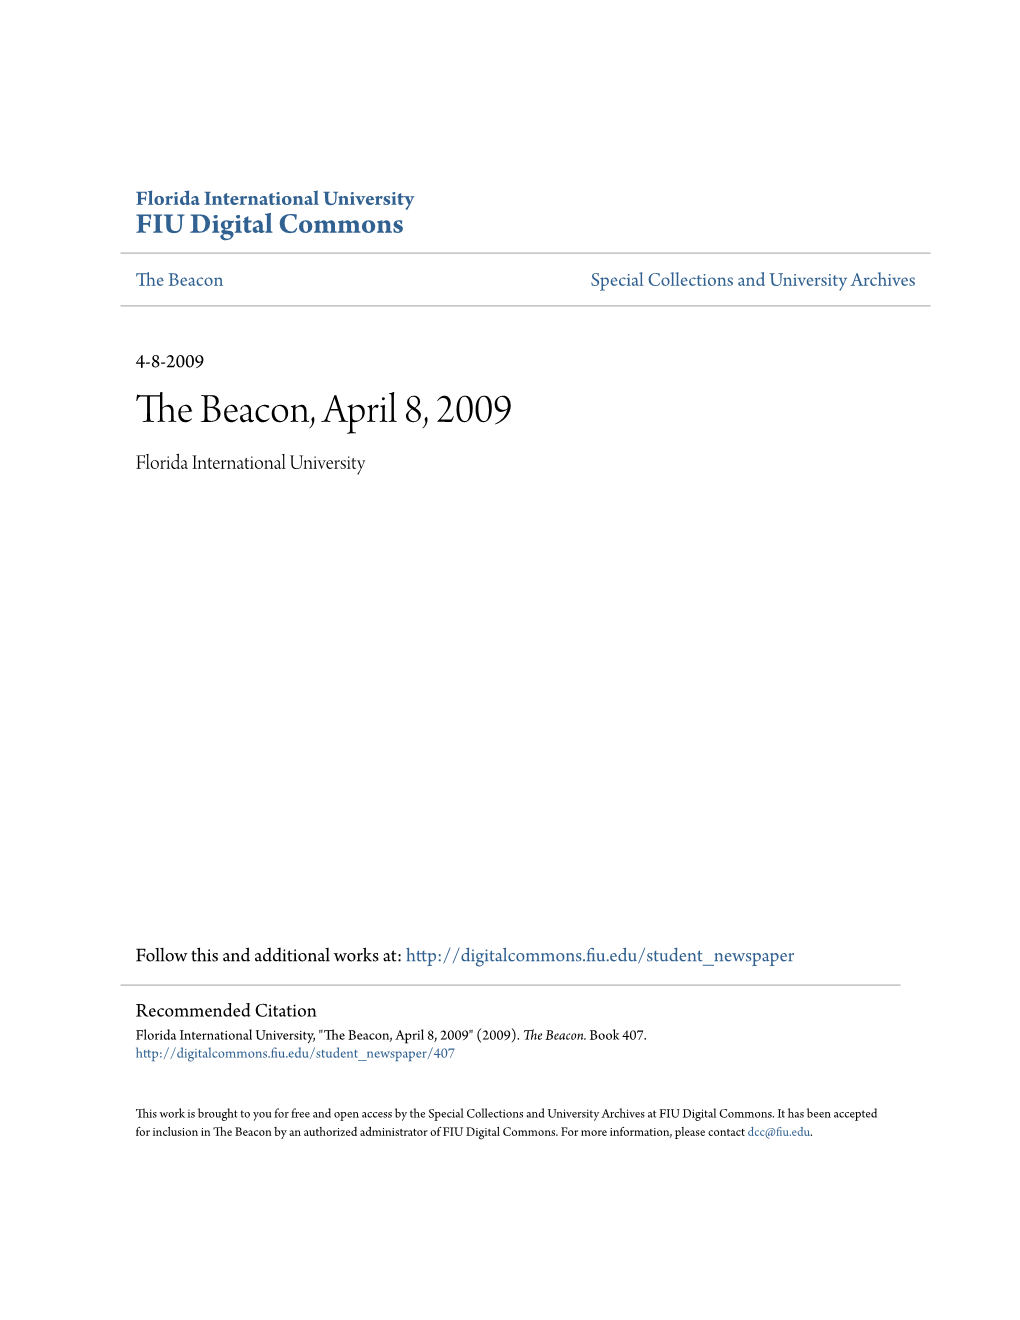 The Beacon, April 8, 2009 Florida International University